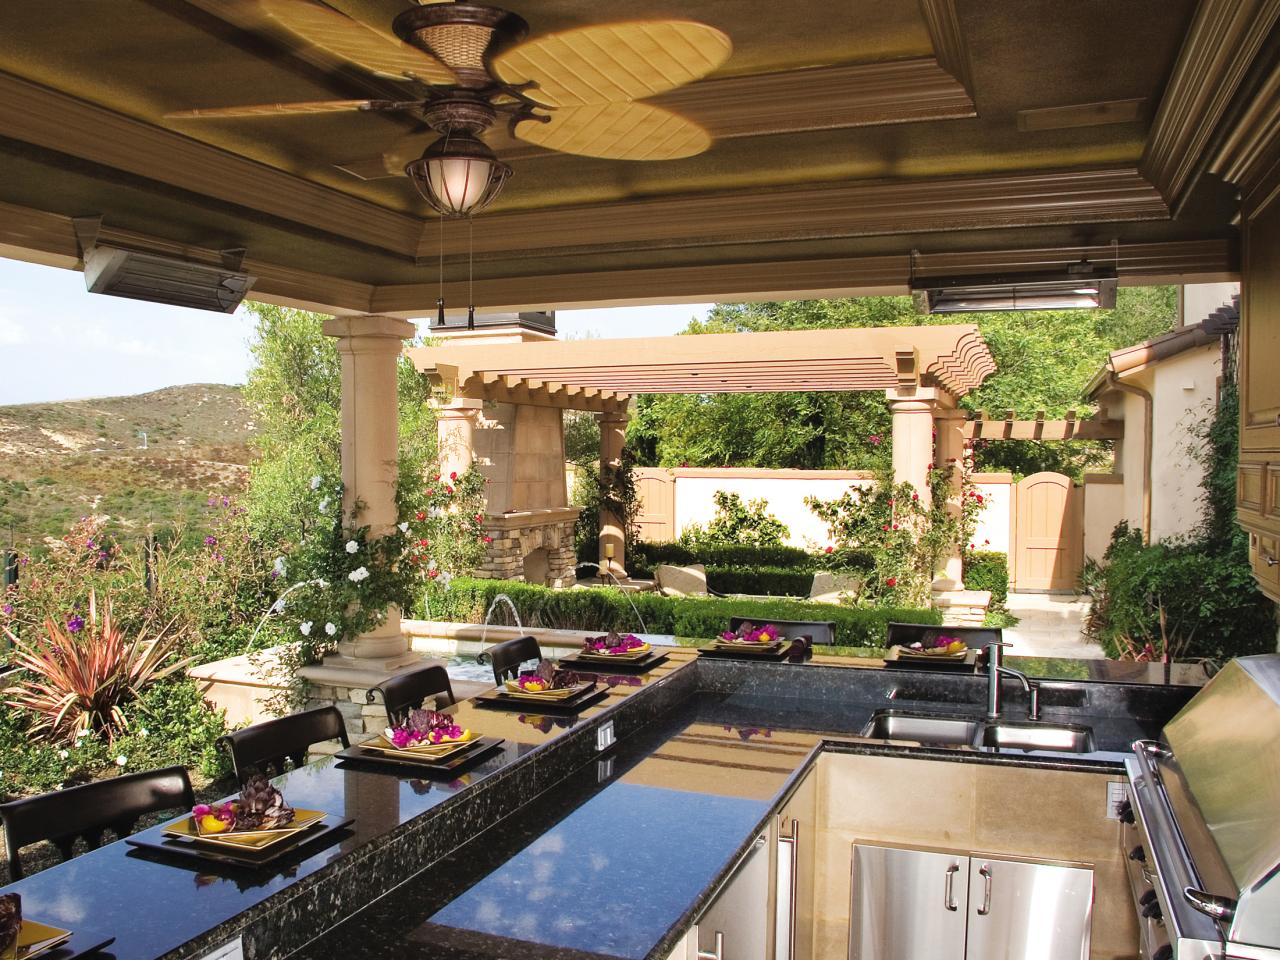 Outdoor Kitchen Countertops Options | HGTV